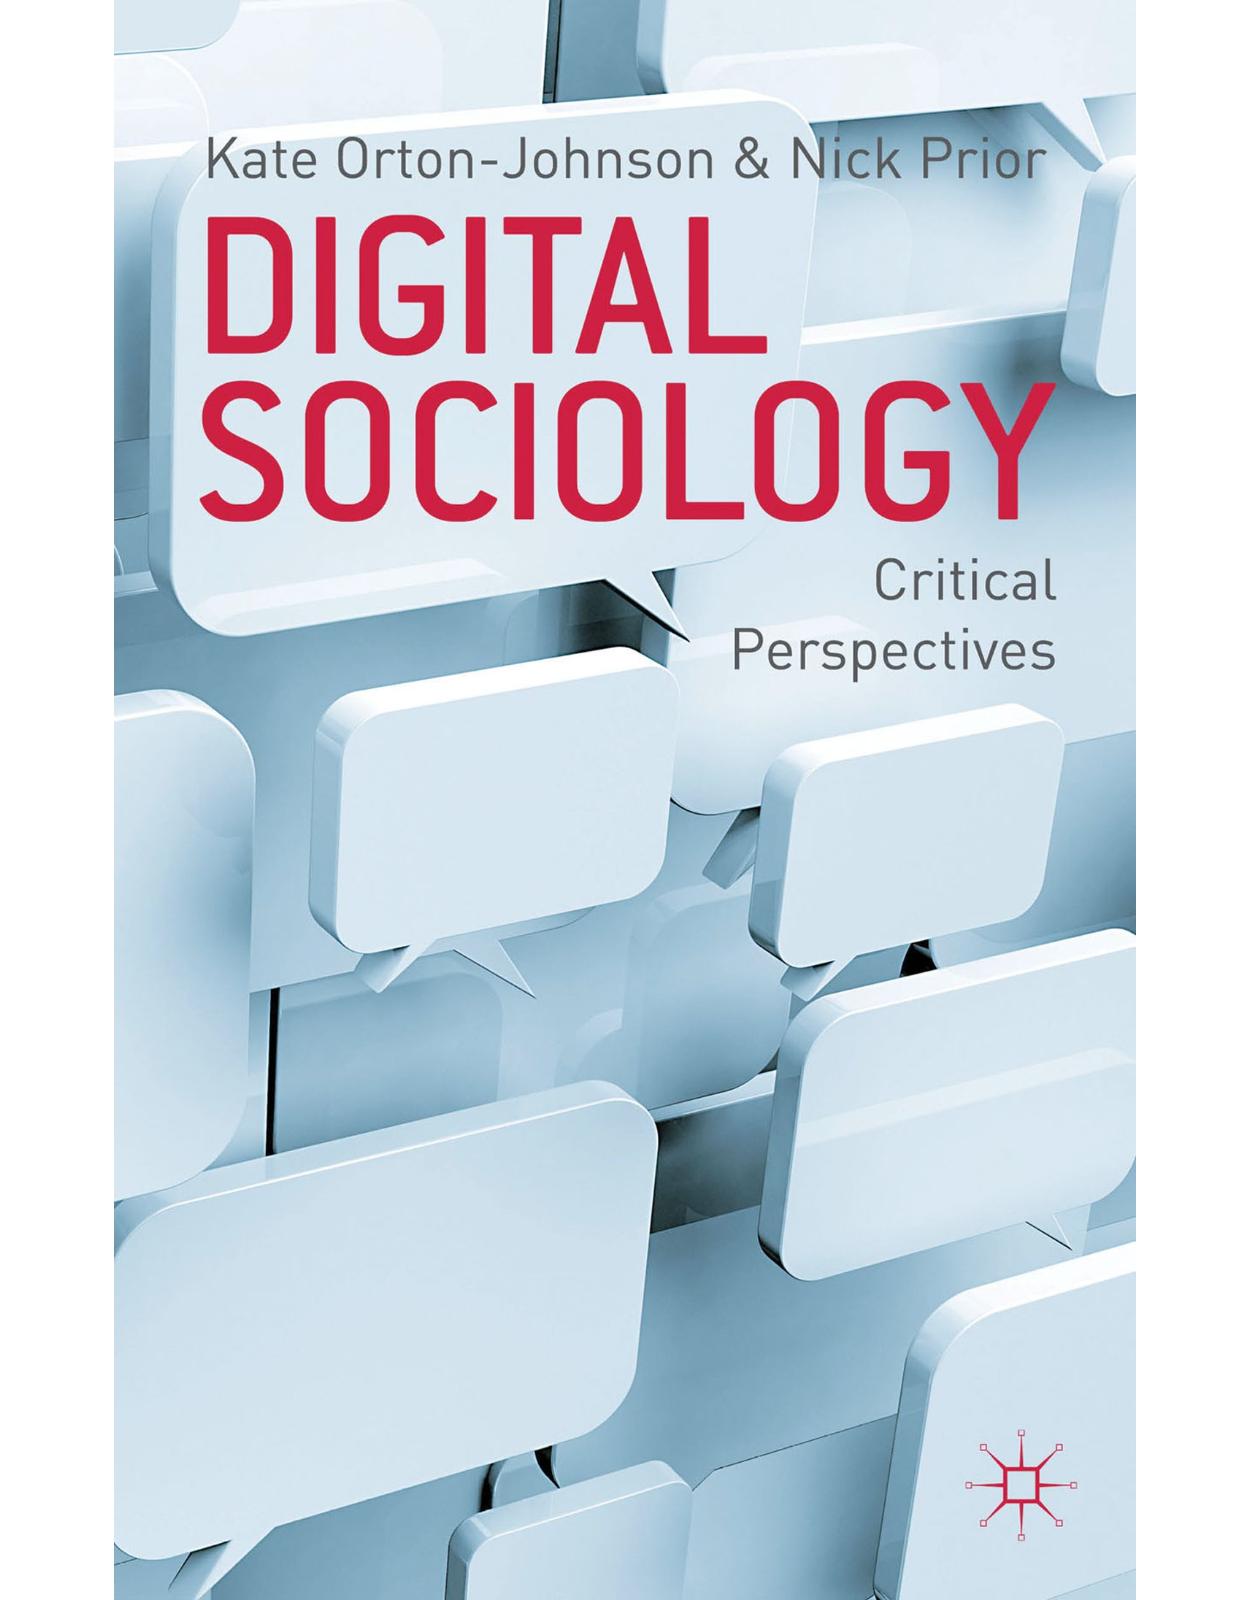 Digital Sociology: Critical Perspectives